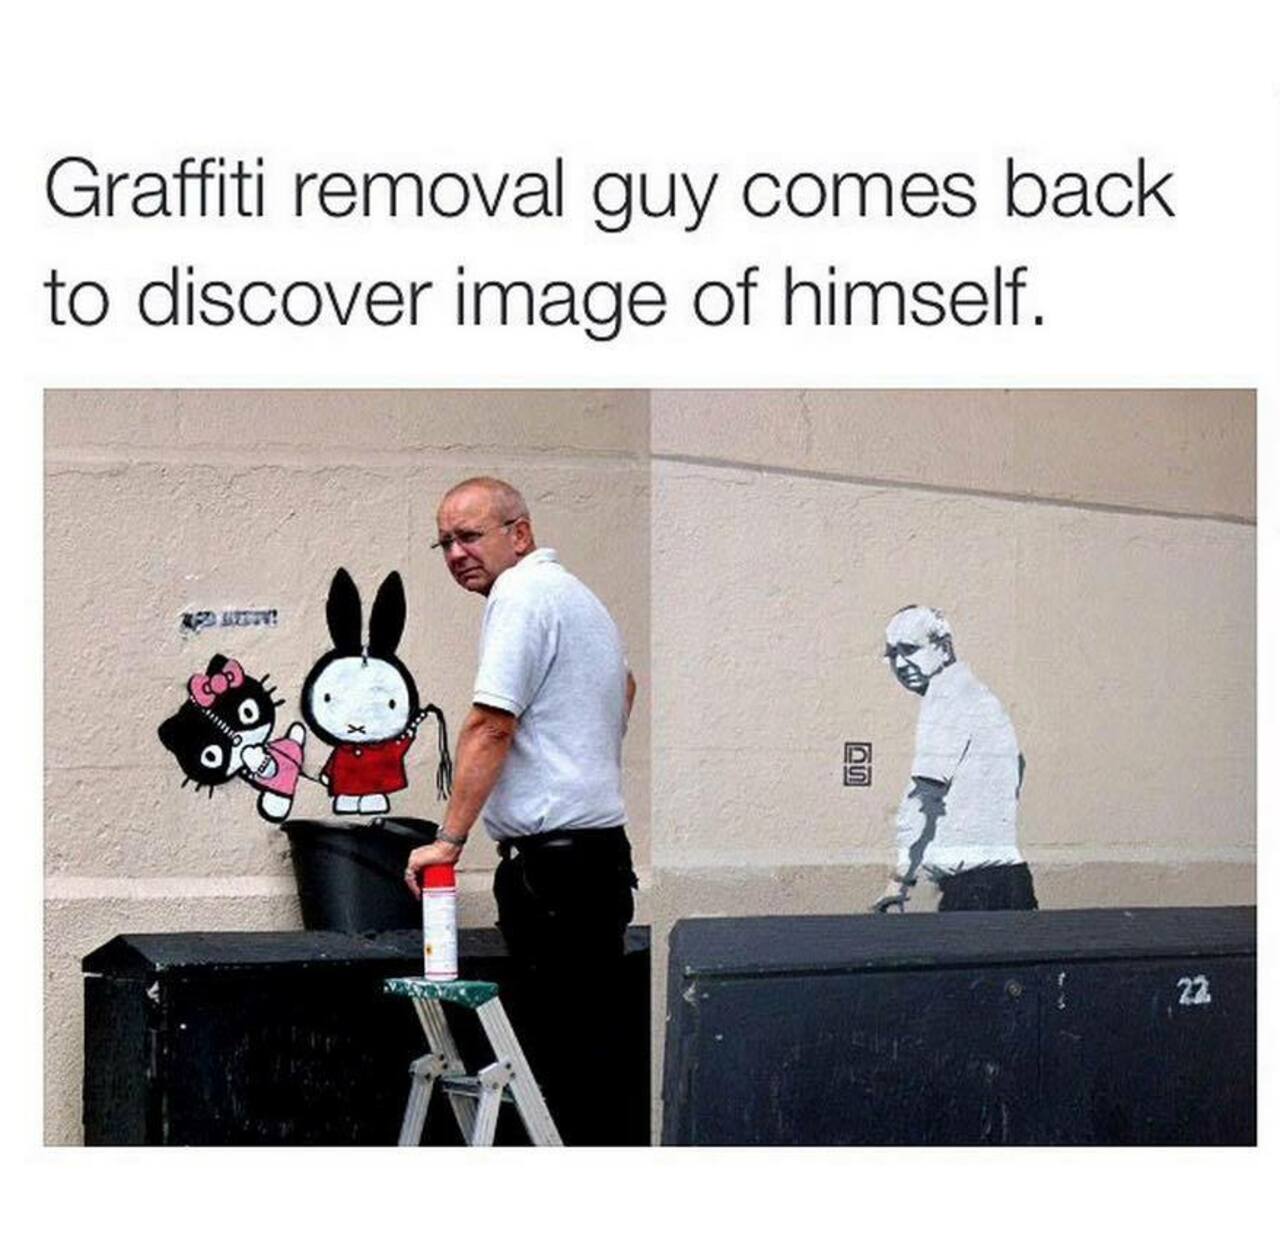 RT- Haha @BoyfromtheCrowd Graffiti removal man comes back to find a graffiti of himself, #graffiti #streetart http://t.co/B0MPcgH0fz